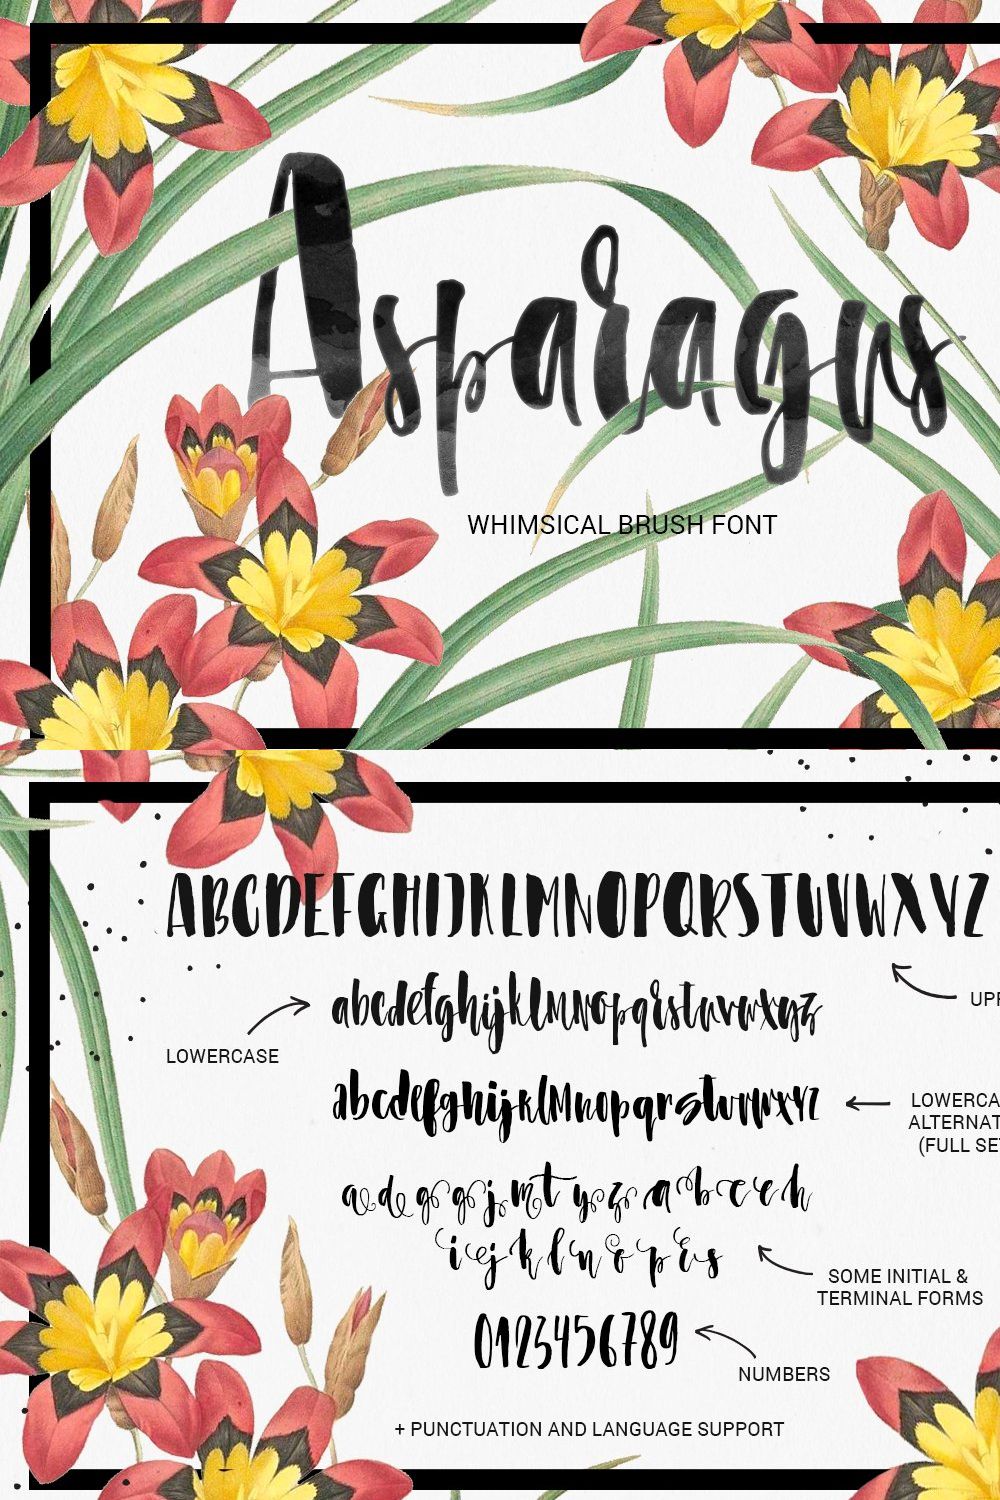 Asparagus - whimsical brush font pinterest preview image.